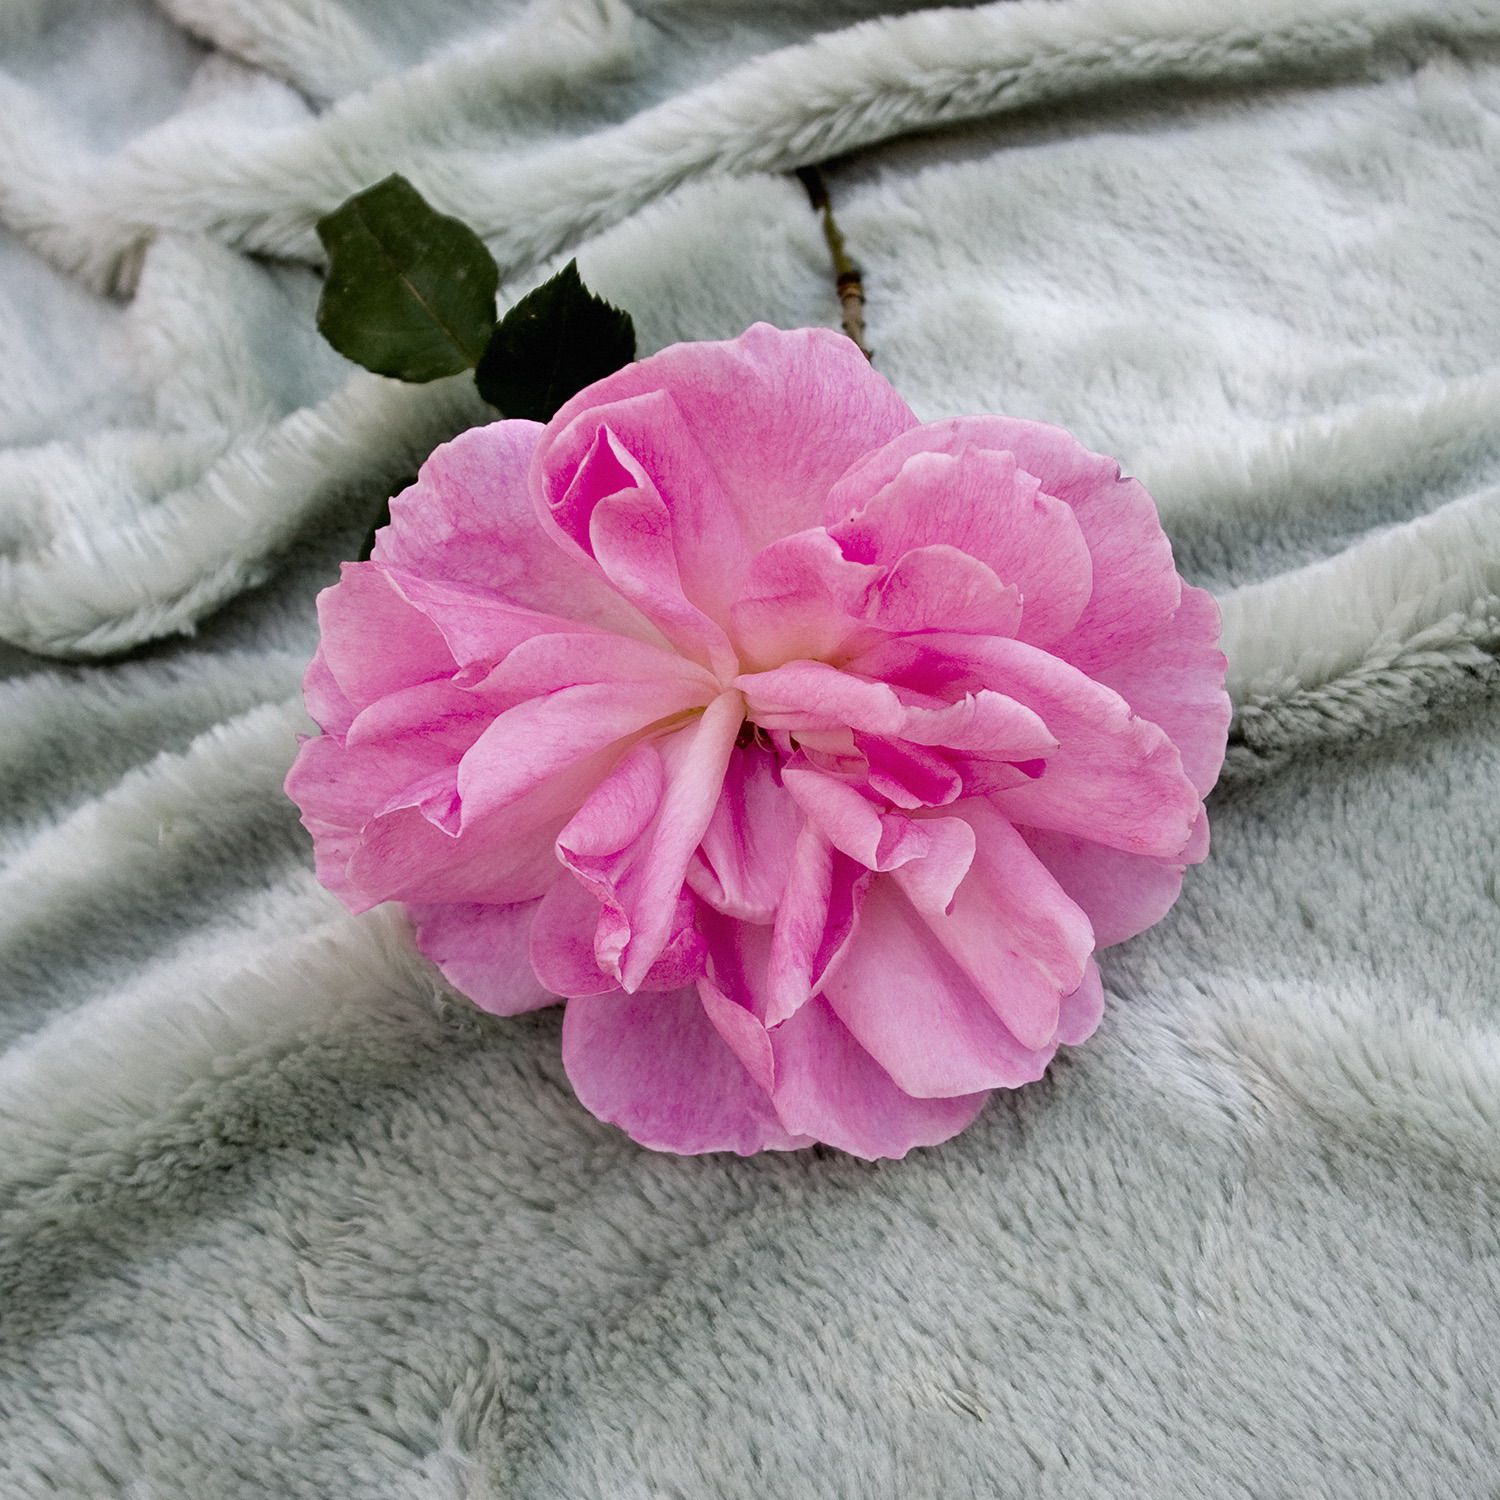 The making of a rose. Fotografía digital. 70x70 cm. 2008